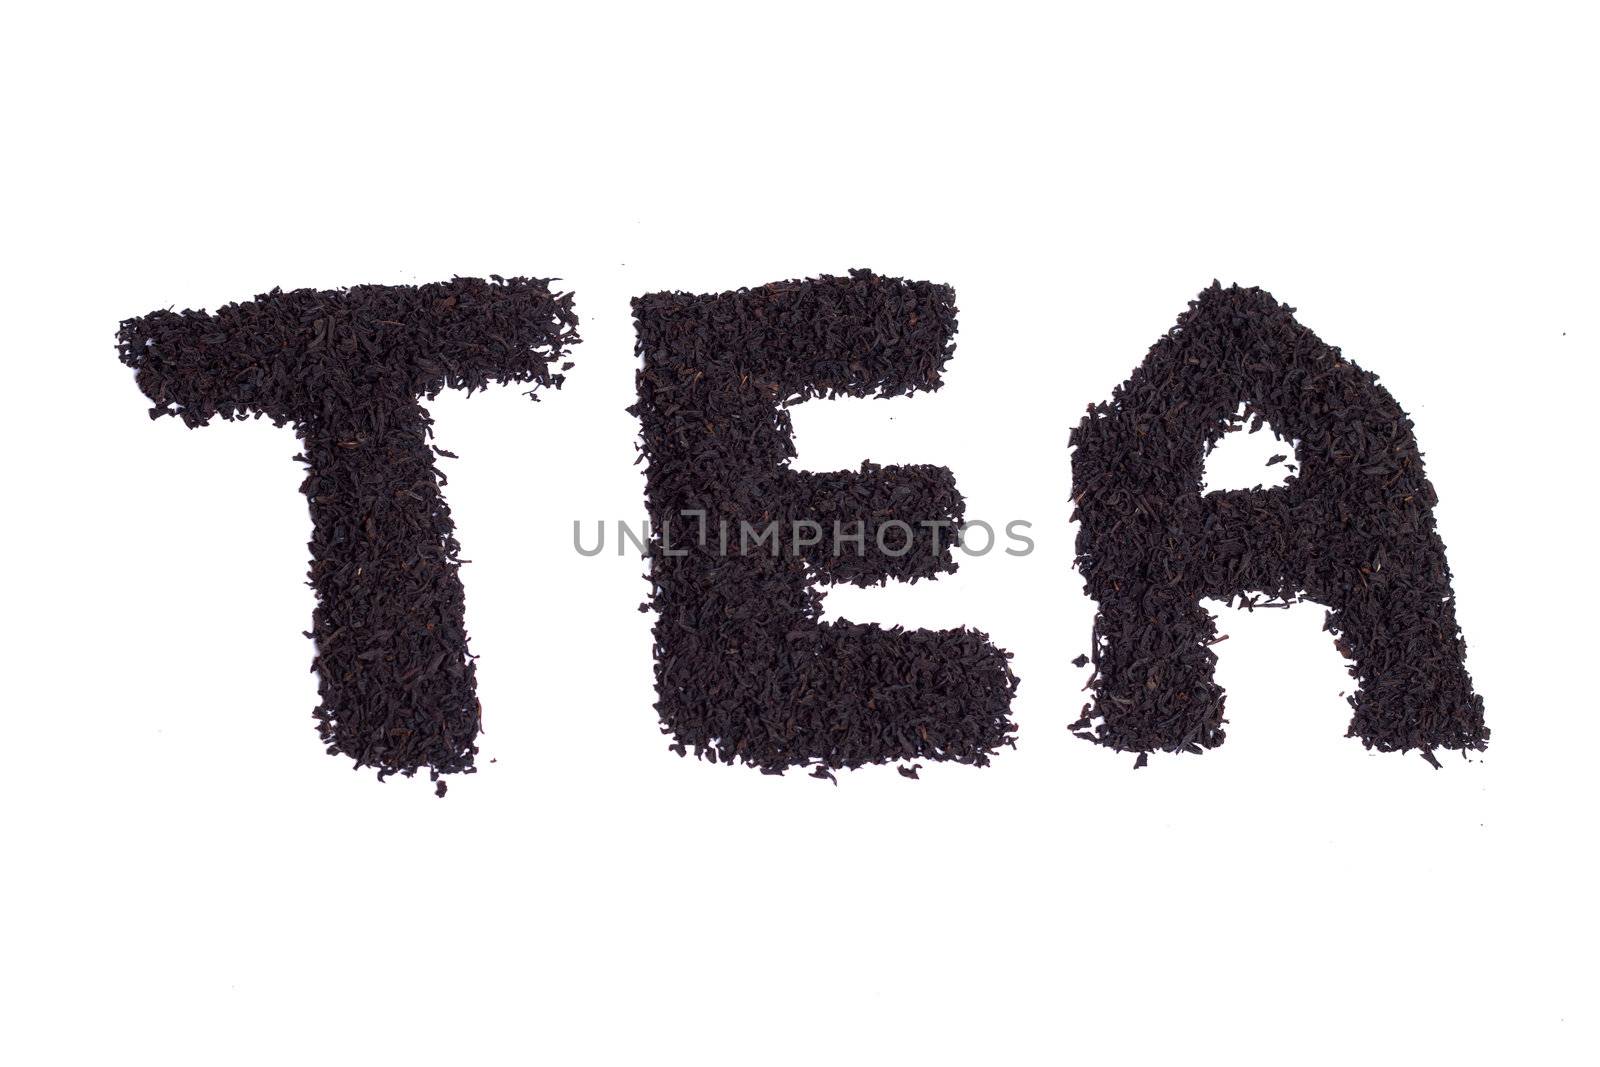 black tea on a white background by aziatik13